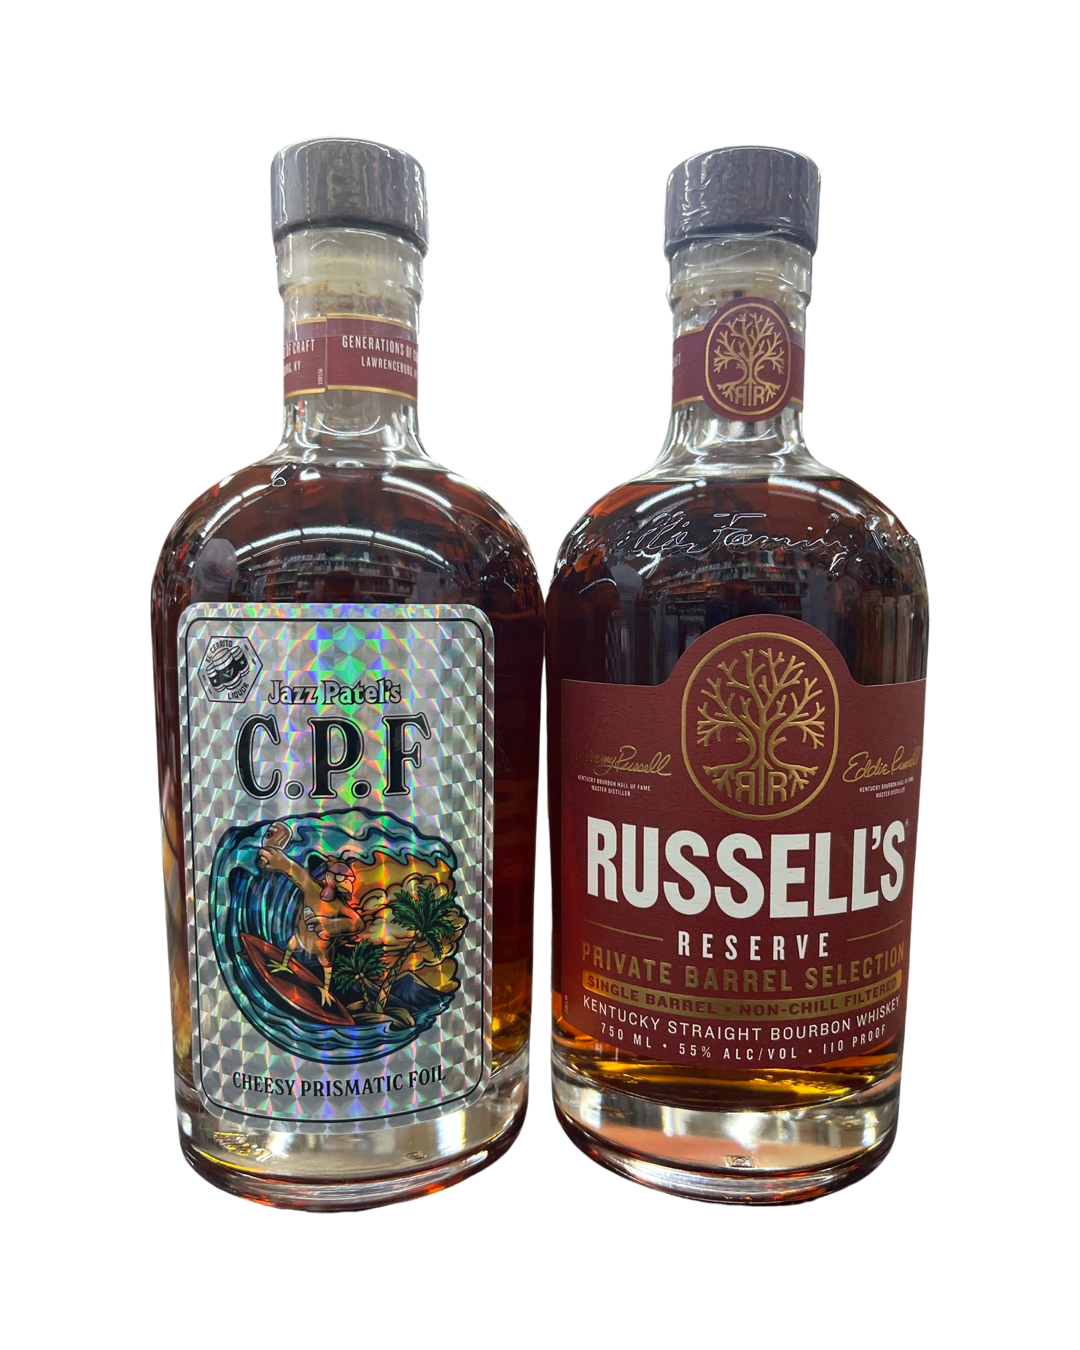 Russell's Reserve Single Barrel C.P.F (Cheesy Prismatic Foil) Store Pick - Limit 2